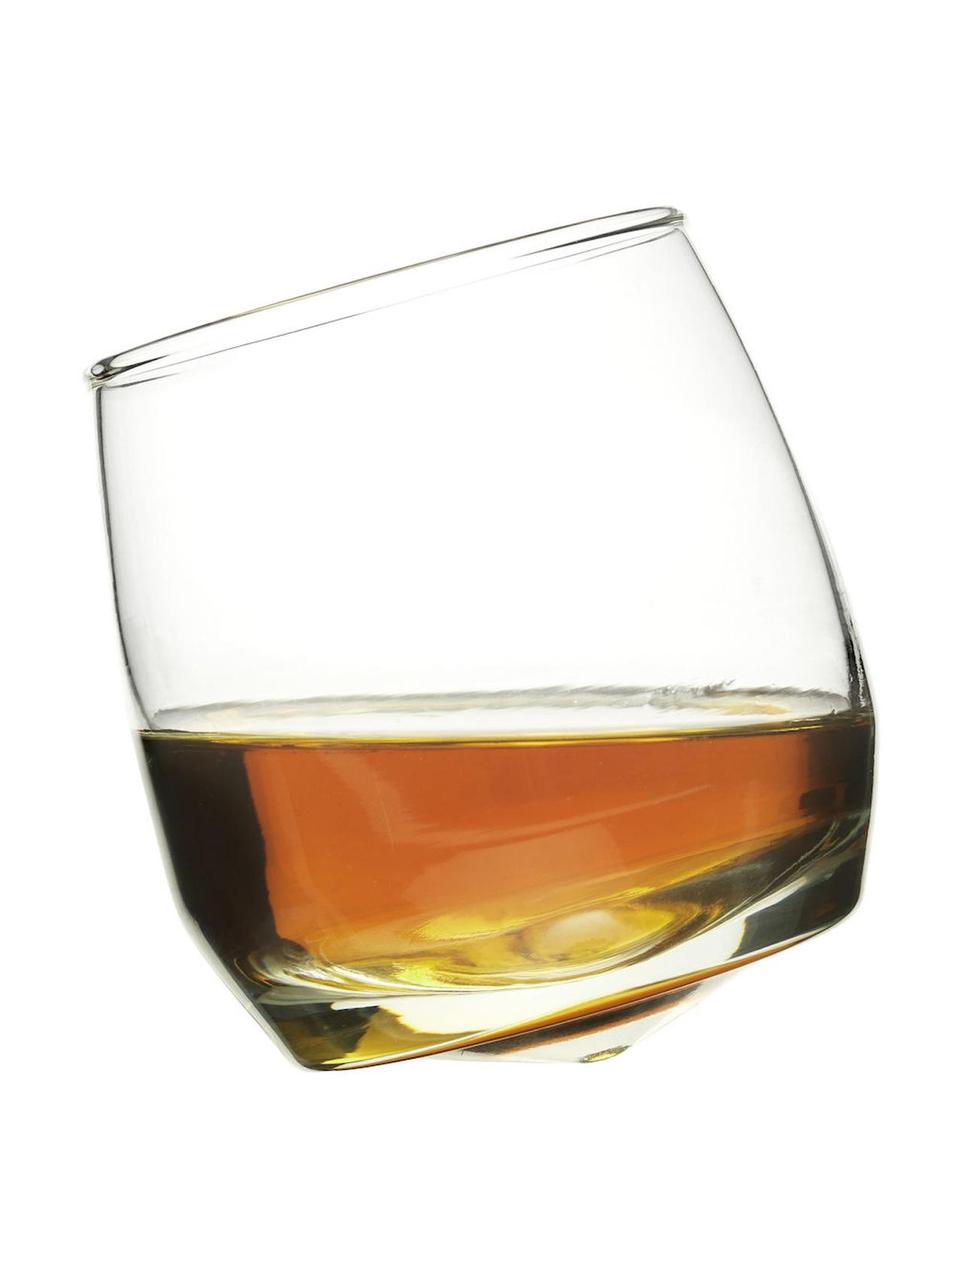 Whiskyglazen Rocking met ronde bodem, 6 stuks, Mondgeblazen glas, Transparant, Ø 7 x H 9 cm, 200 ml